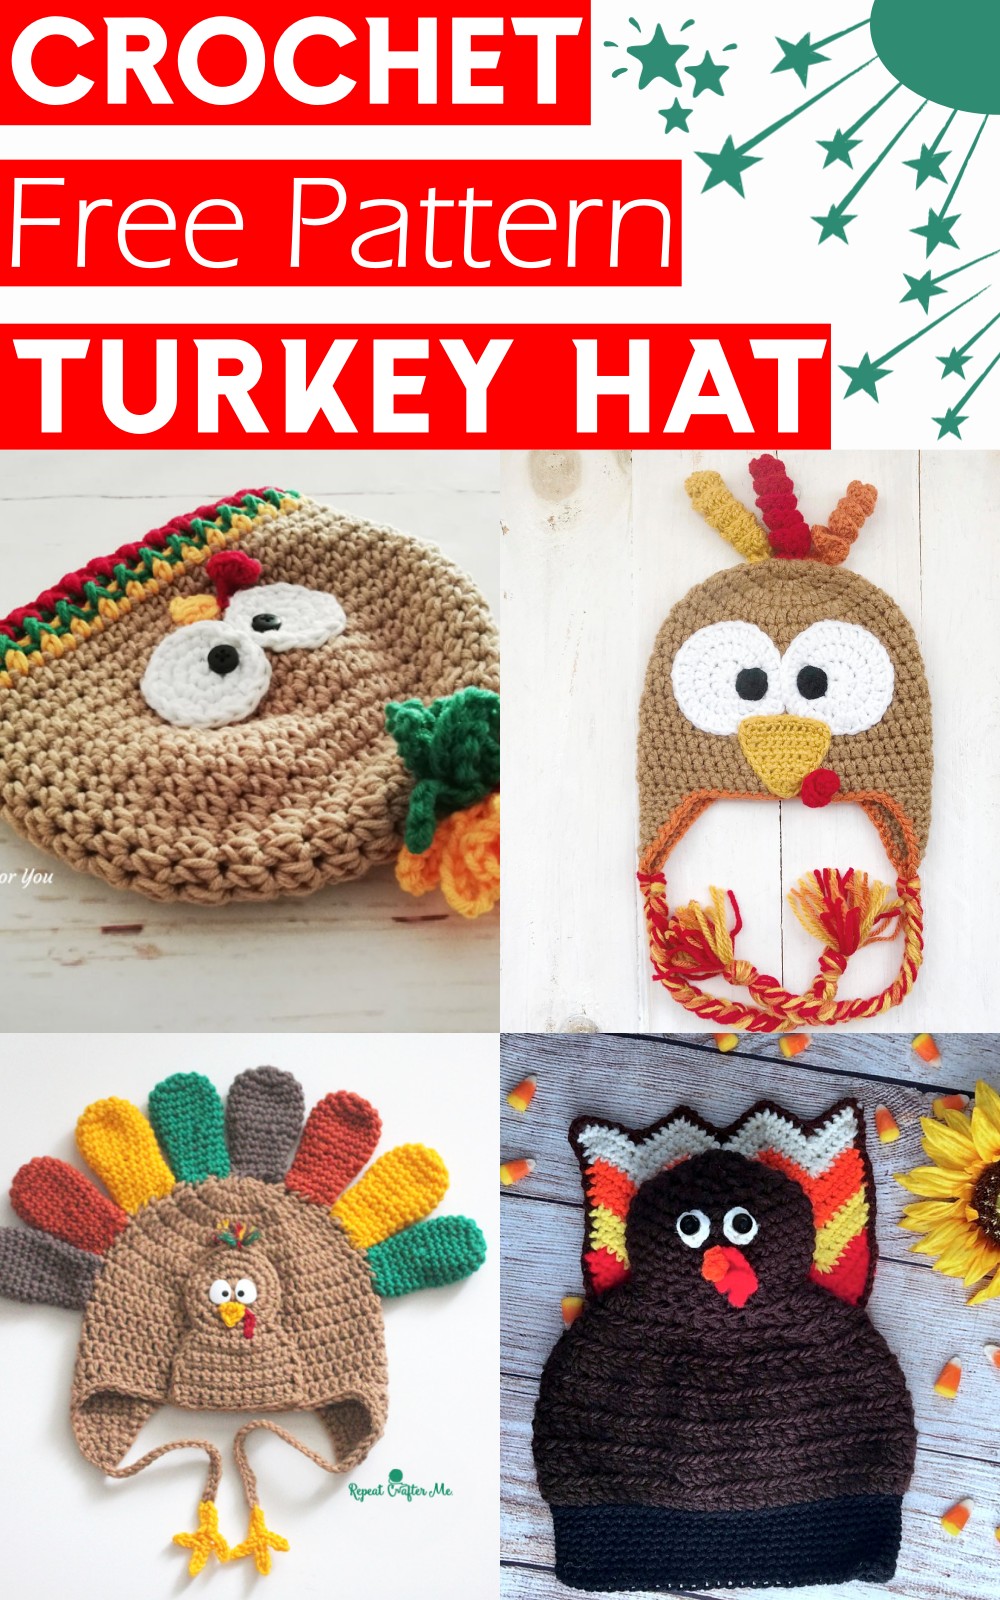 5 Free Crochet Turkey Hat Patterns For Thanksgiving 